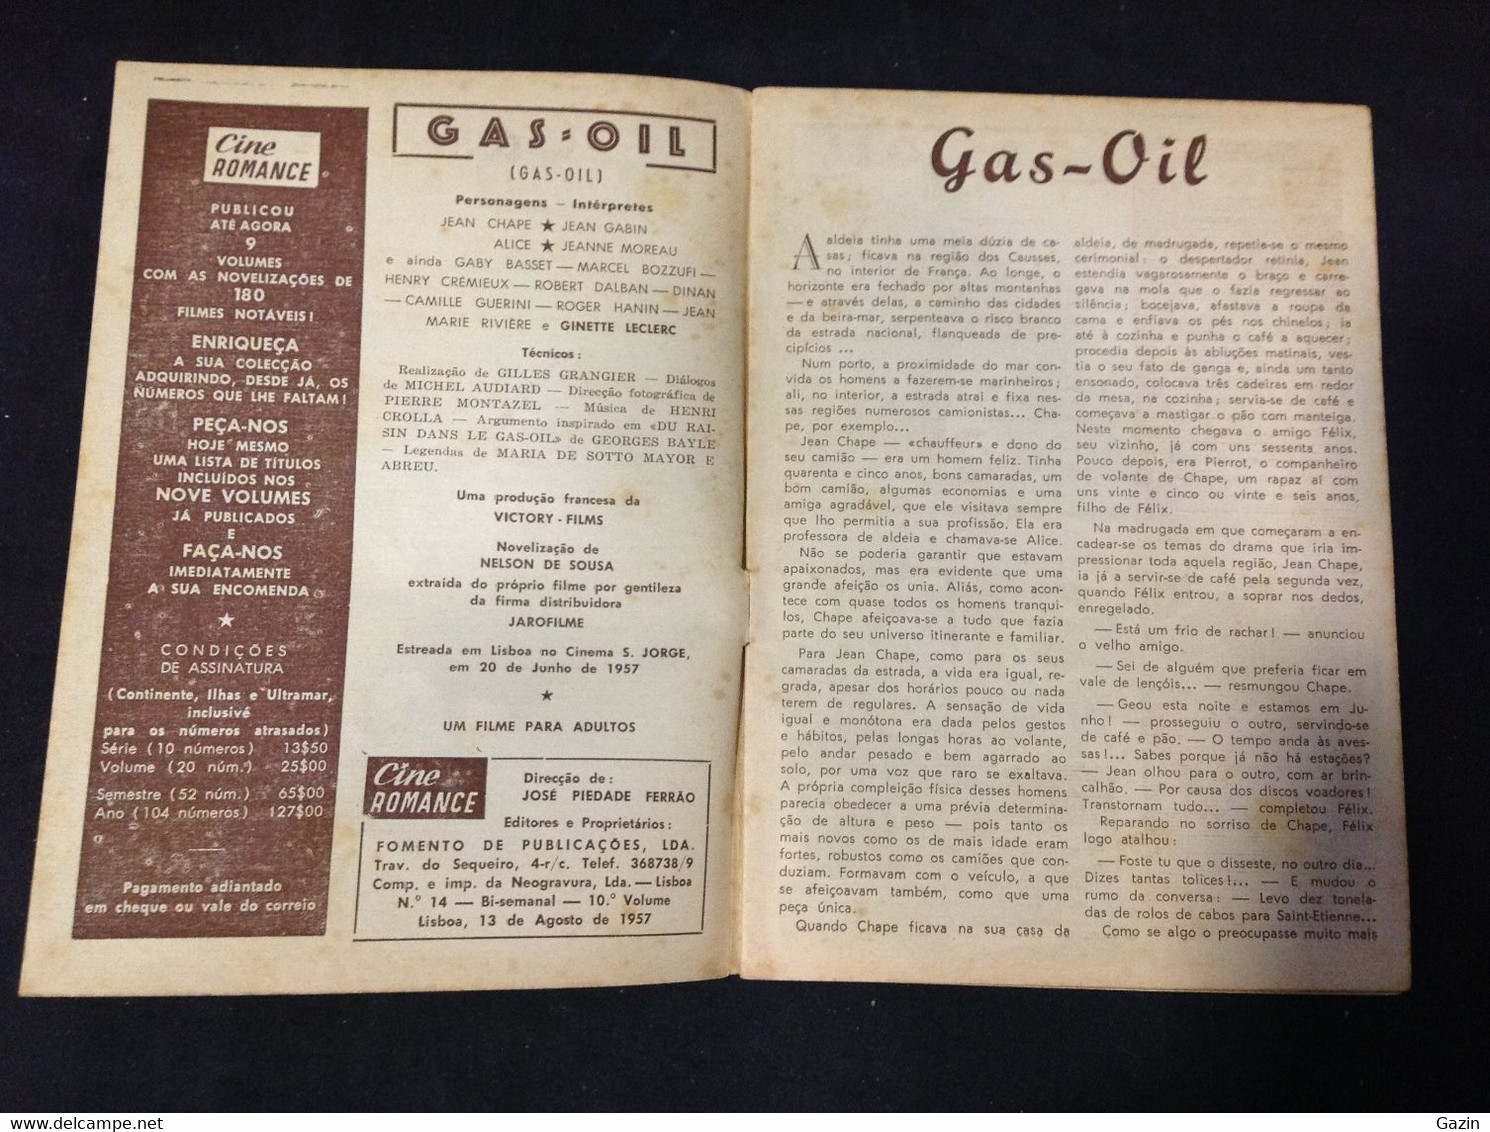 C2/23 - Gas Oil - Jean Gabin * Jeanne Moreau -  Portugal Mag - Cine Romance -1957 - Sandra Wirth - Cinema & Television